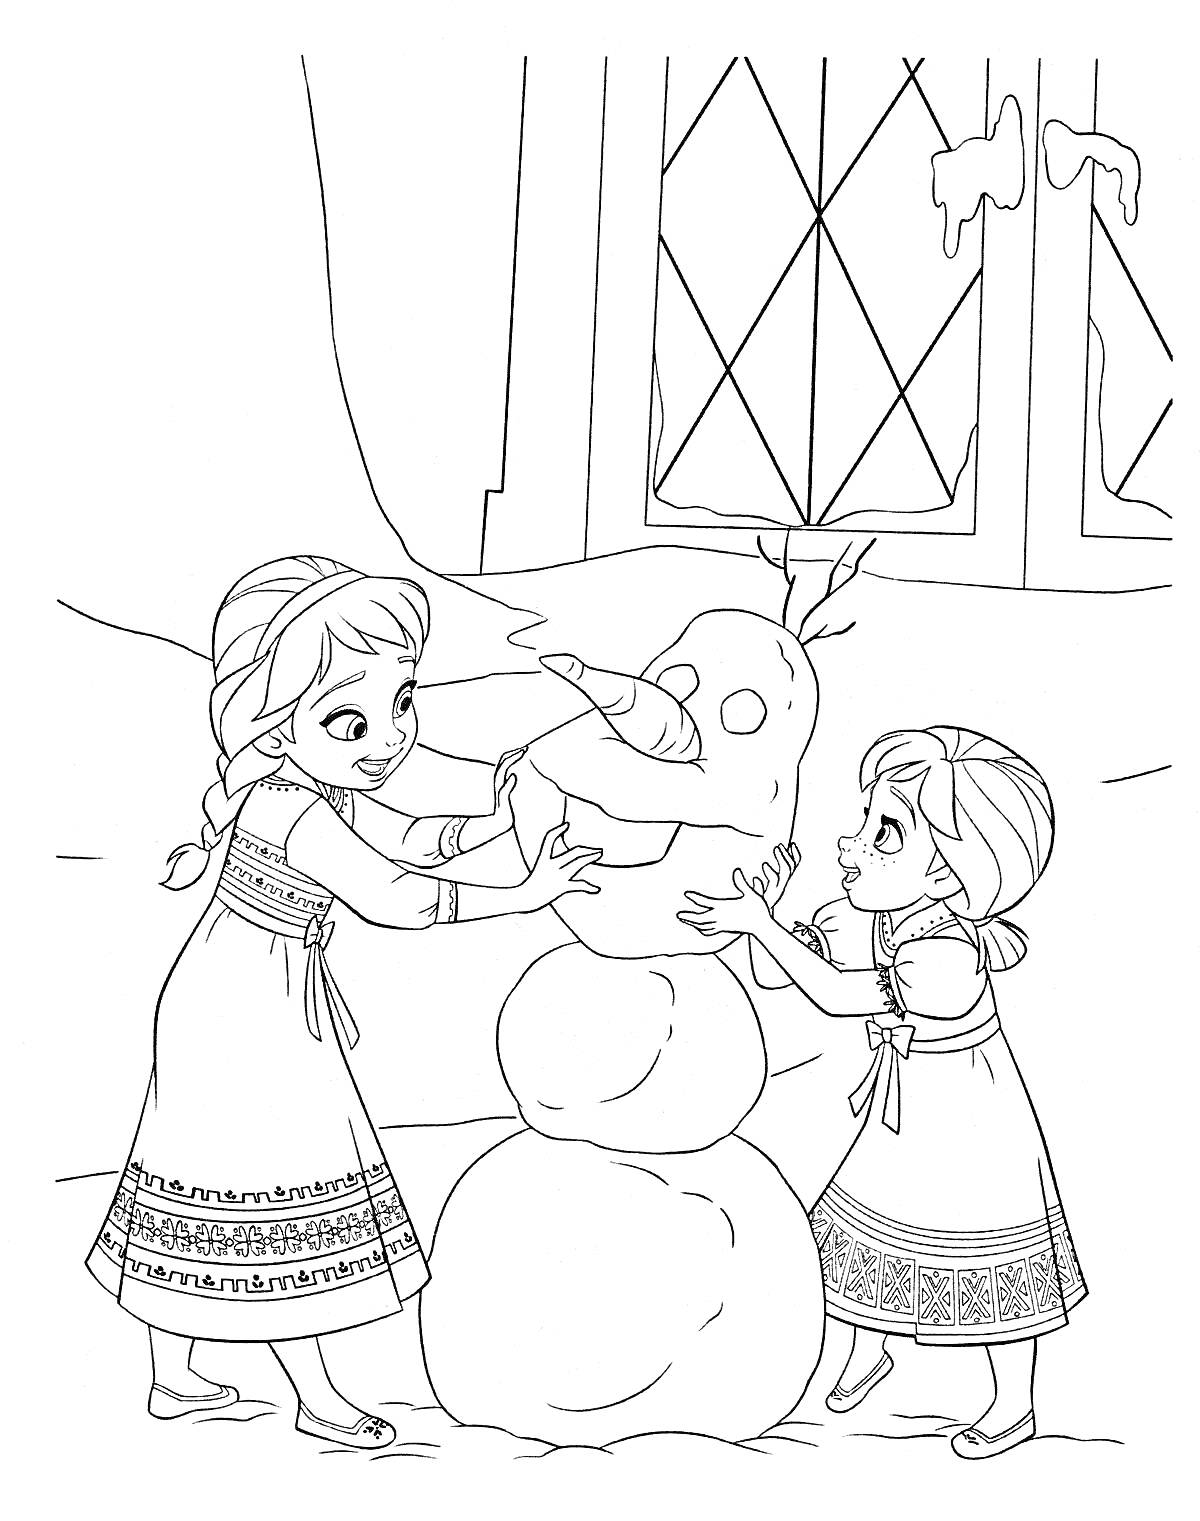 Раскраска Анна и Эльза лепят снеговика внутри дома у окна